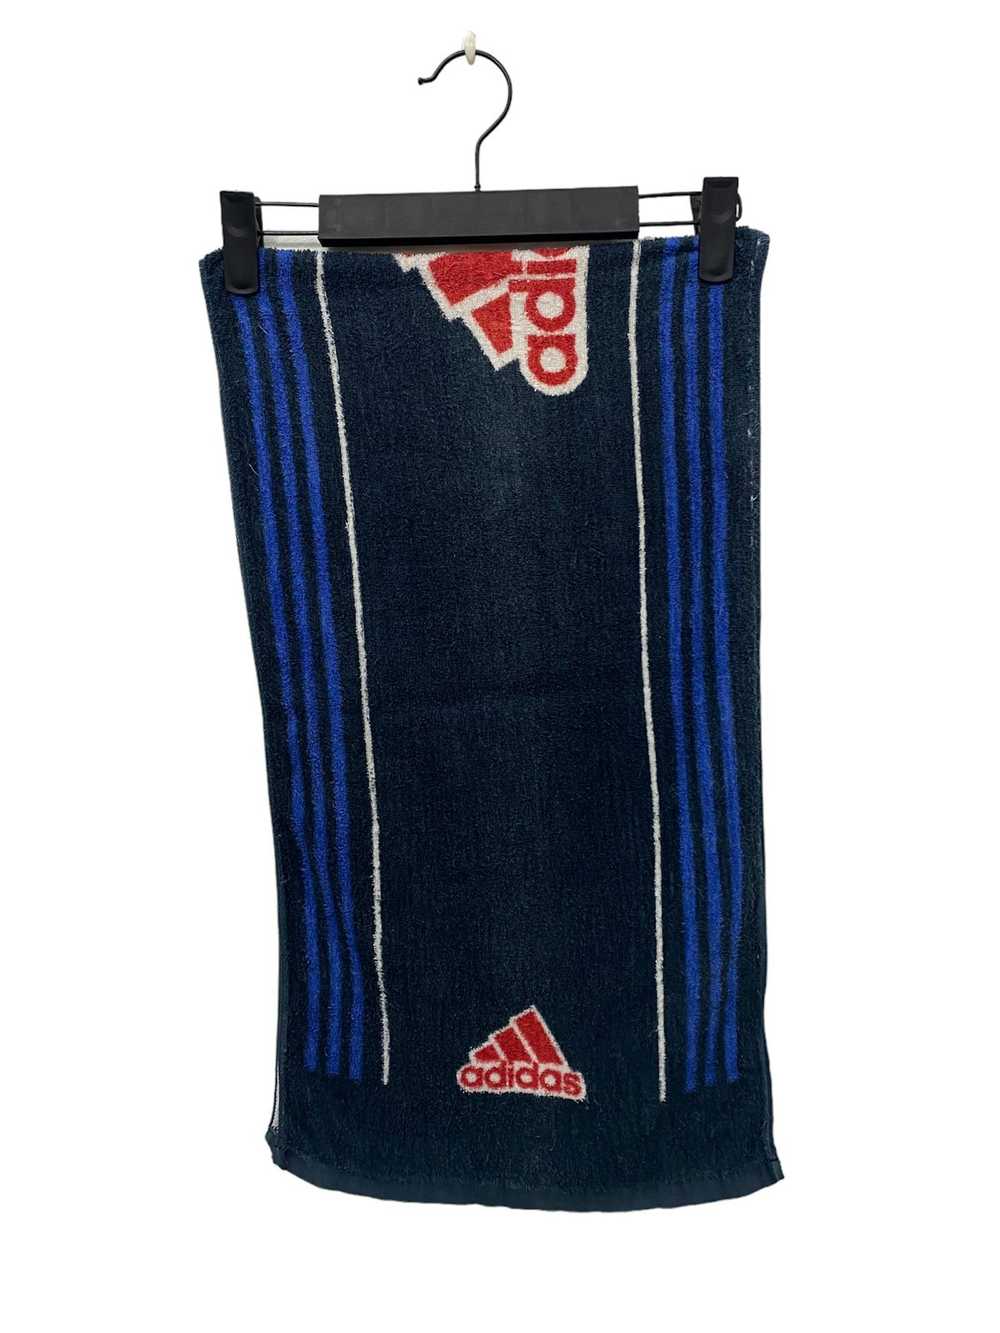 Adidas × Brand ADIDAS sports Face / Hand Towel - image 1